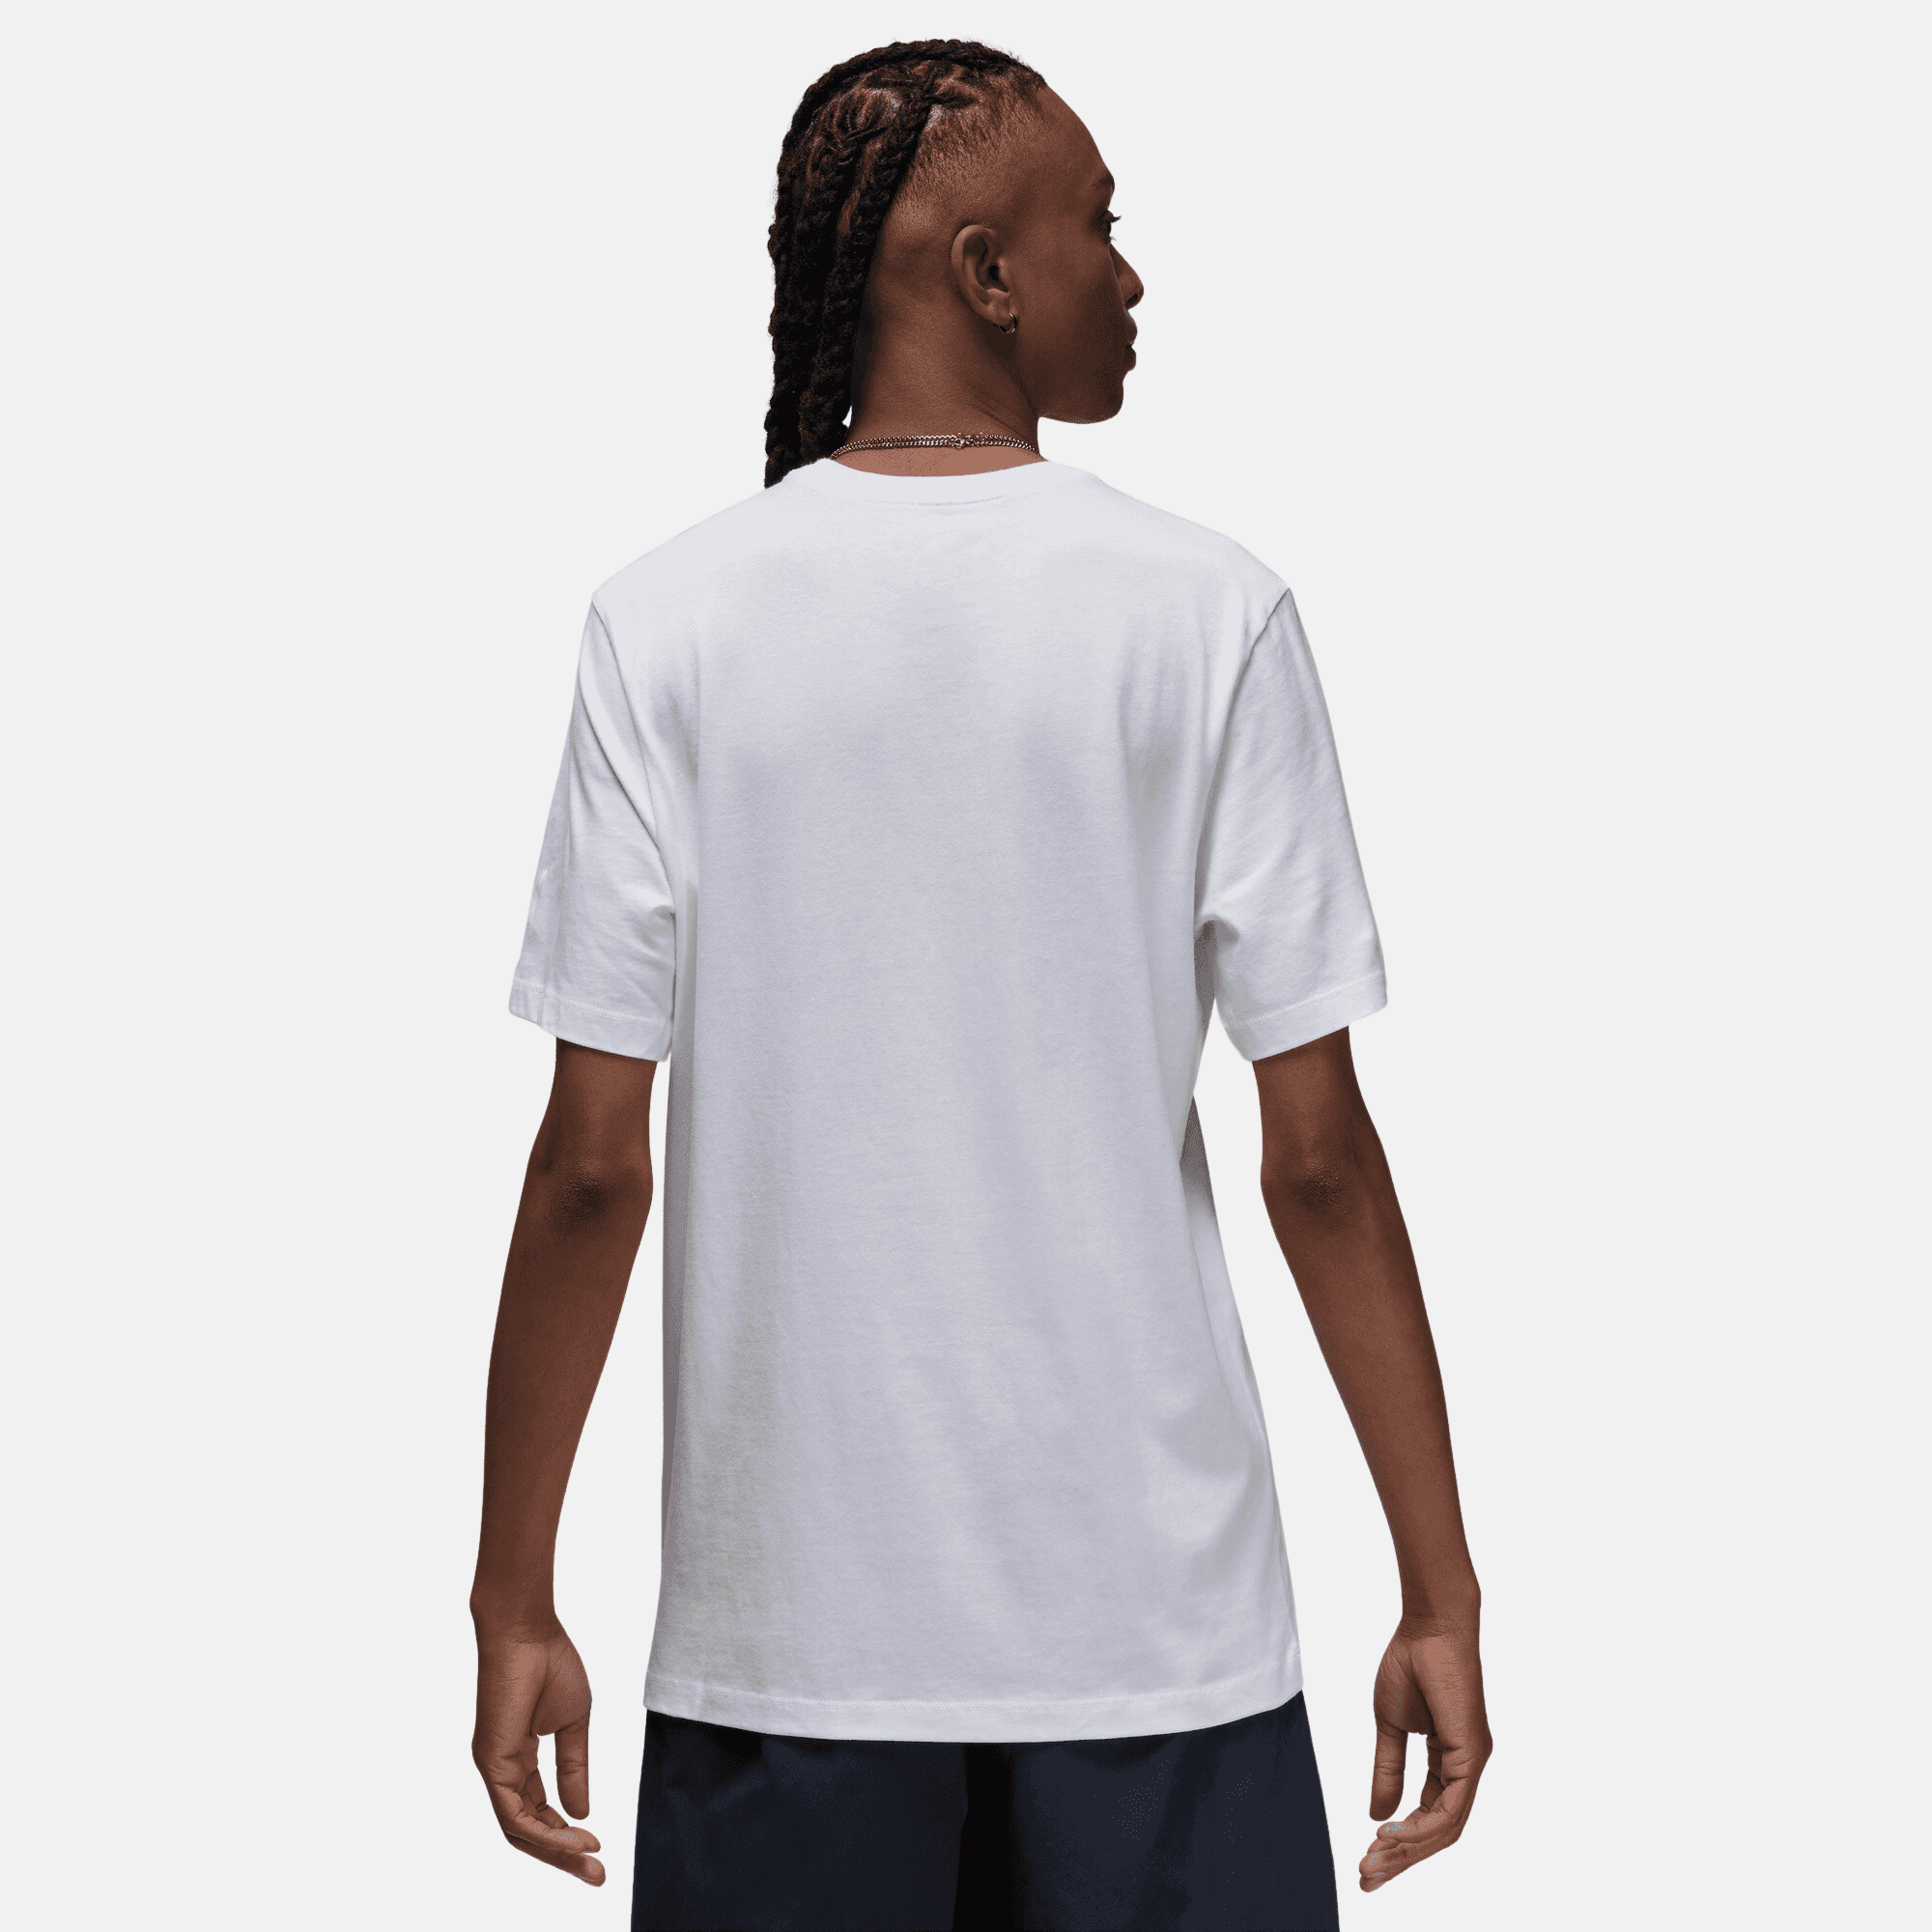 Air Jordan Brand White T-Shirt